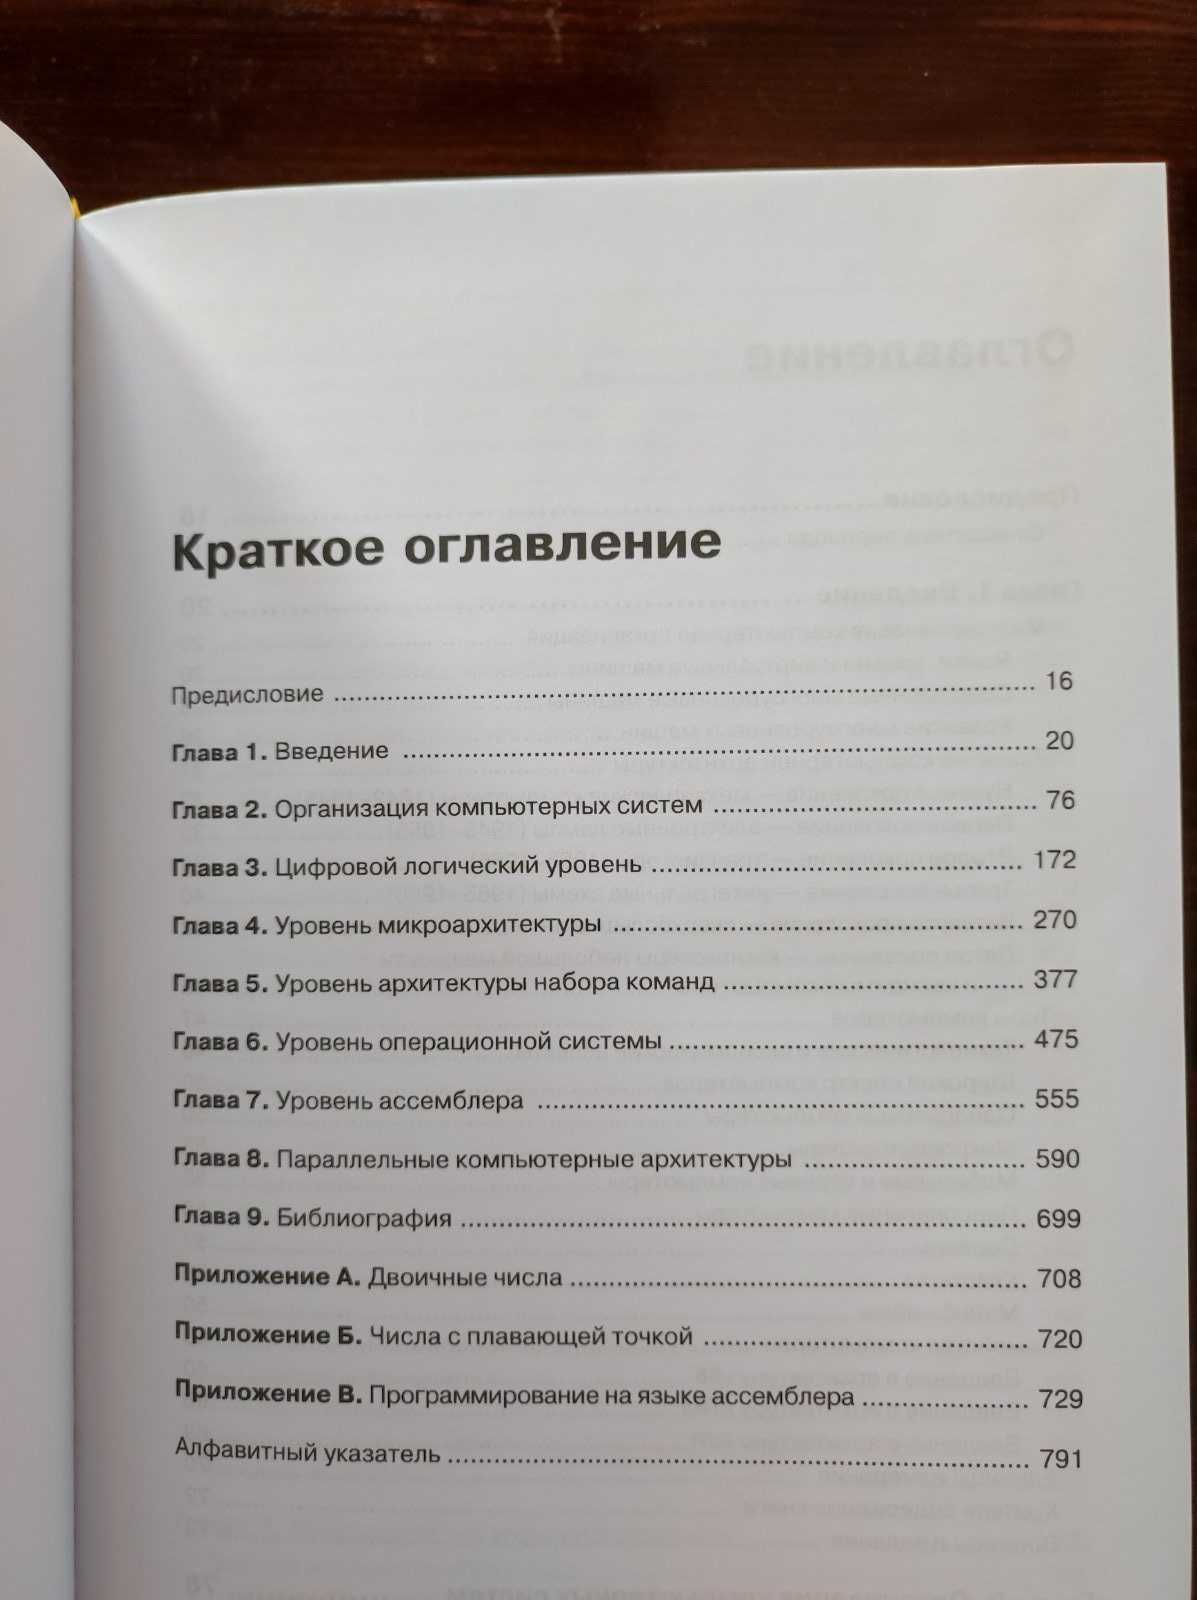 "Архитектура компьютера" Стюарт Таненбаум  6-ое издание